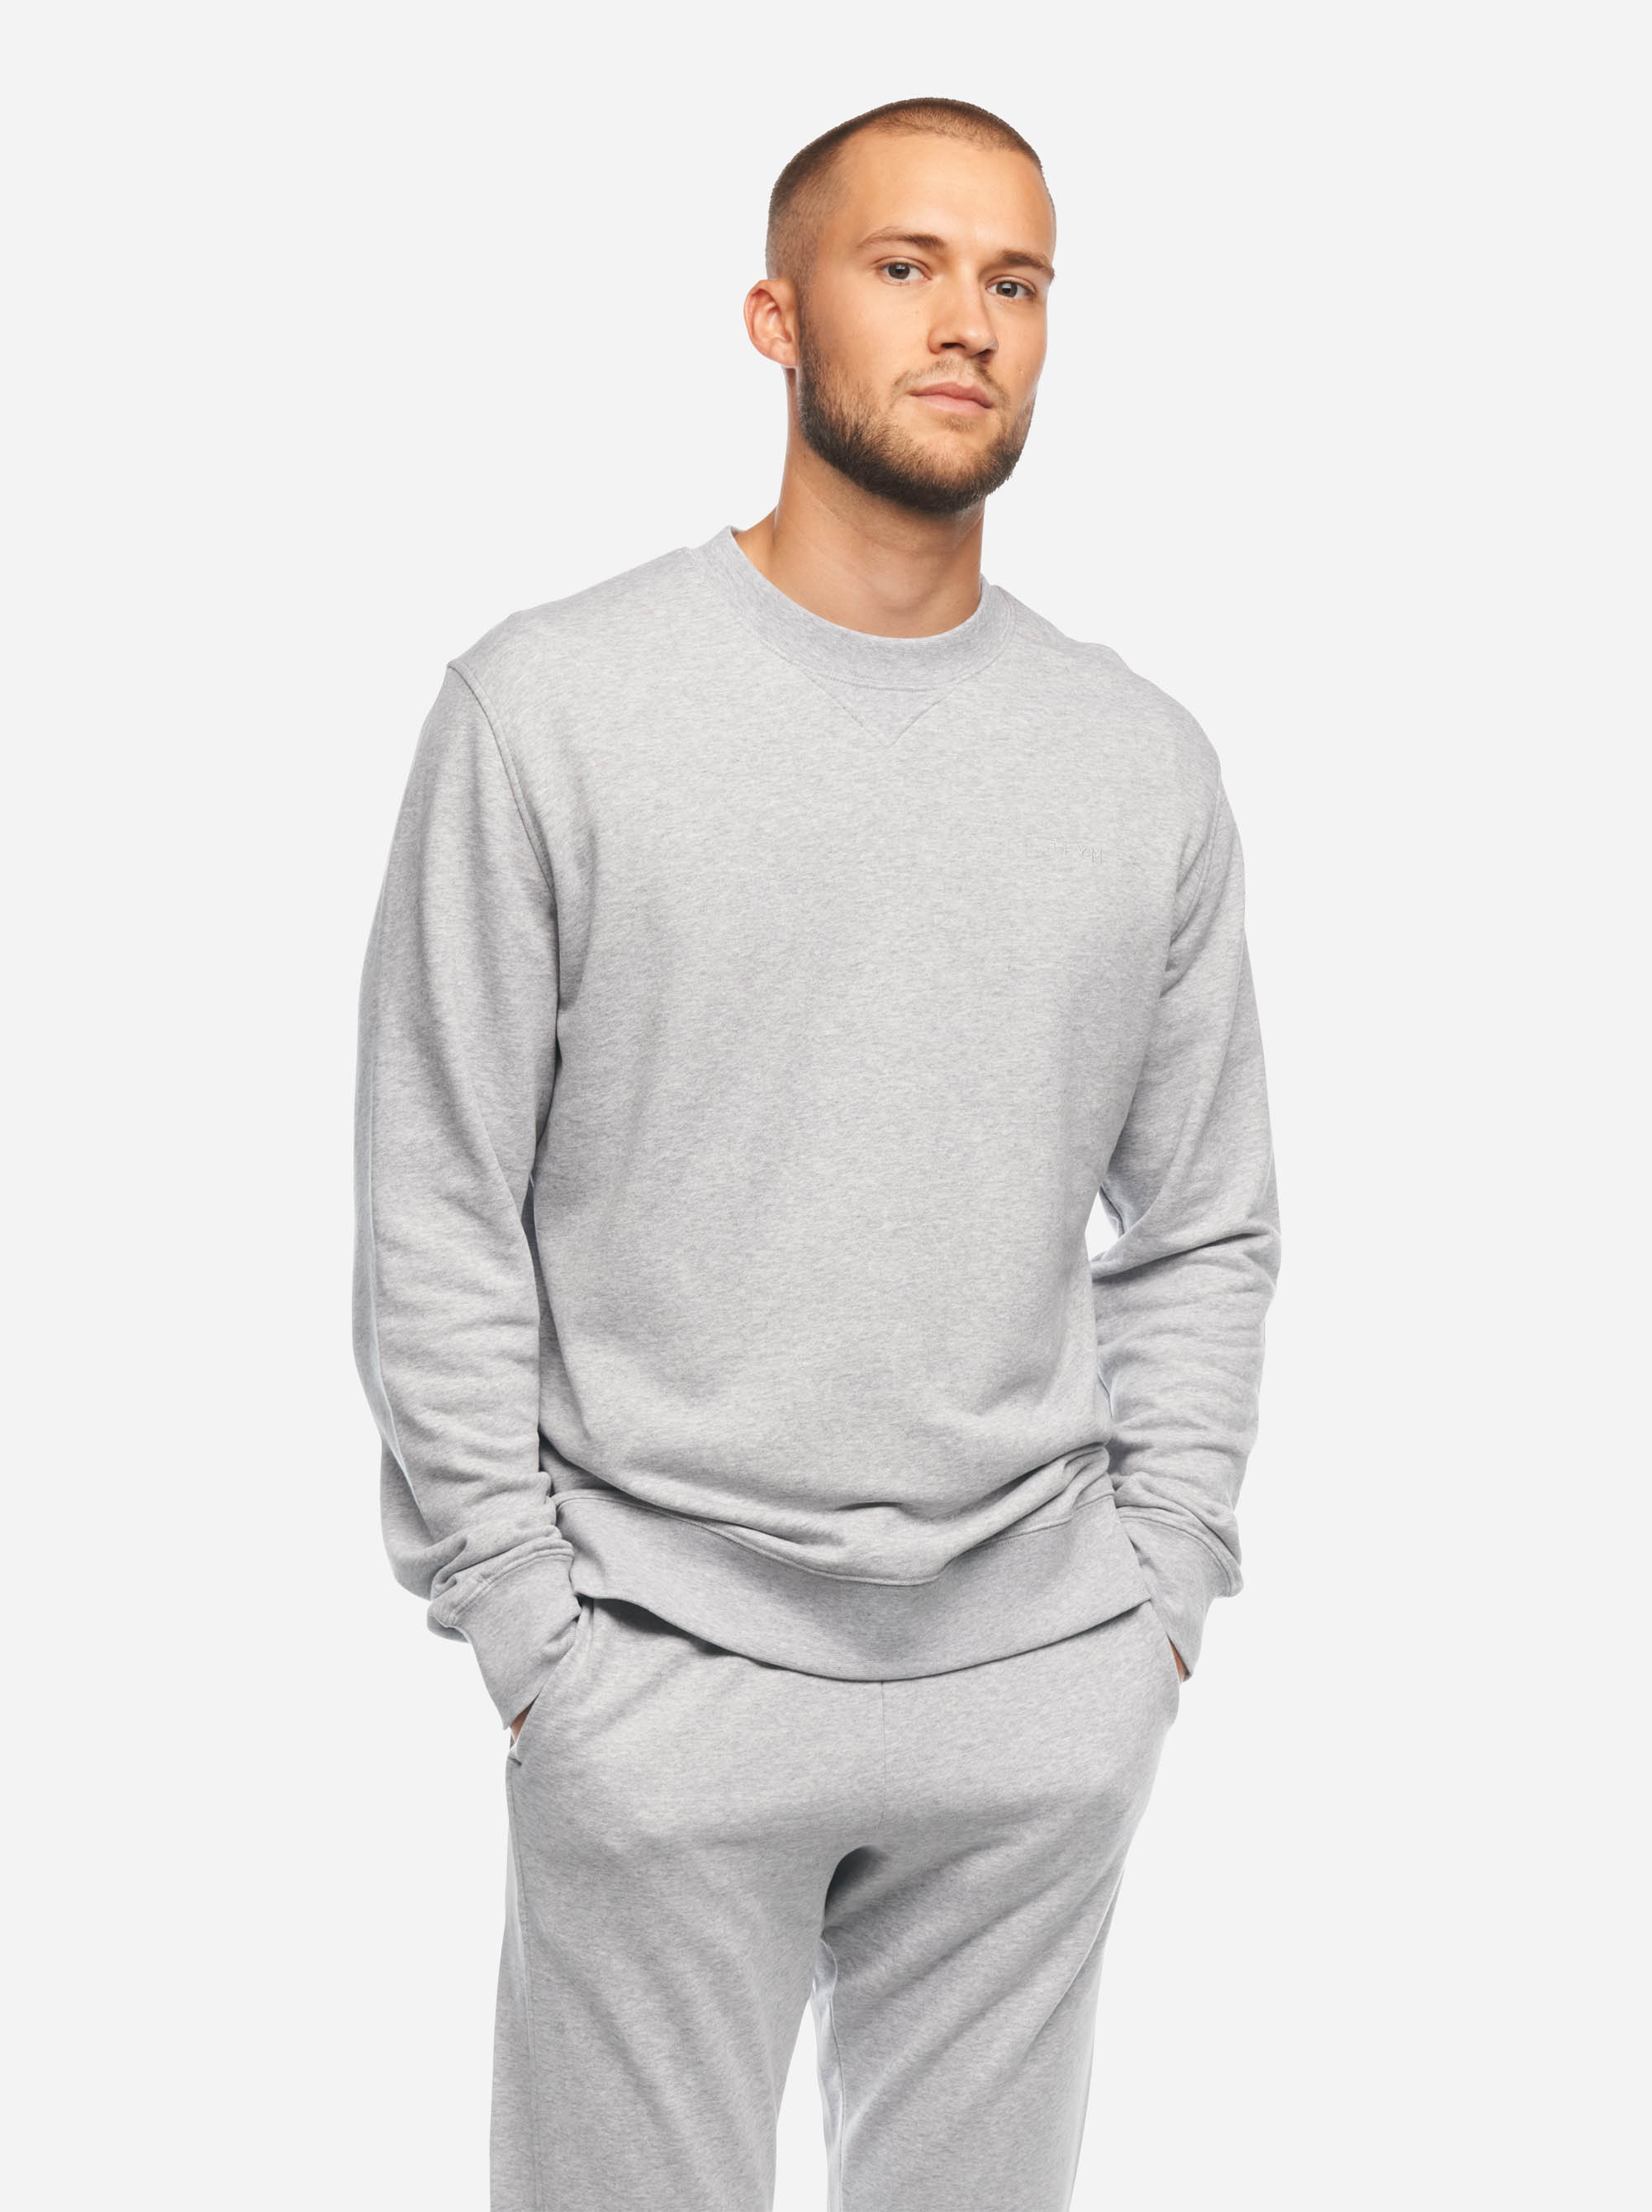 Teym - The Sweatshirt - Men - Grey - 1